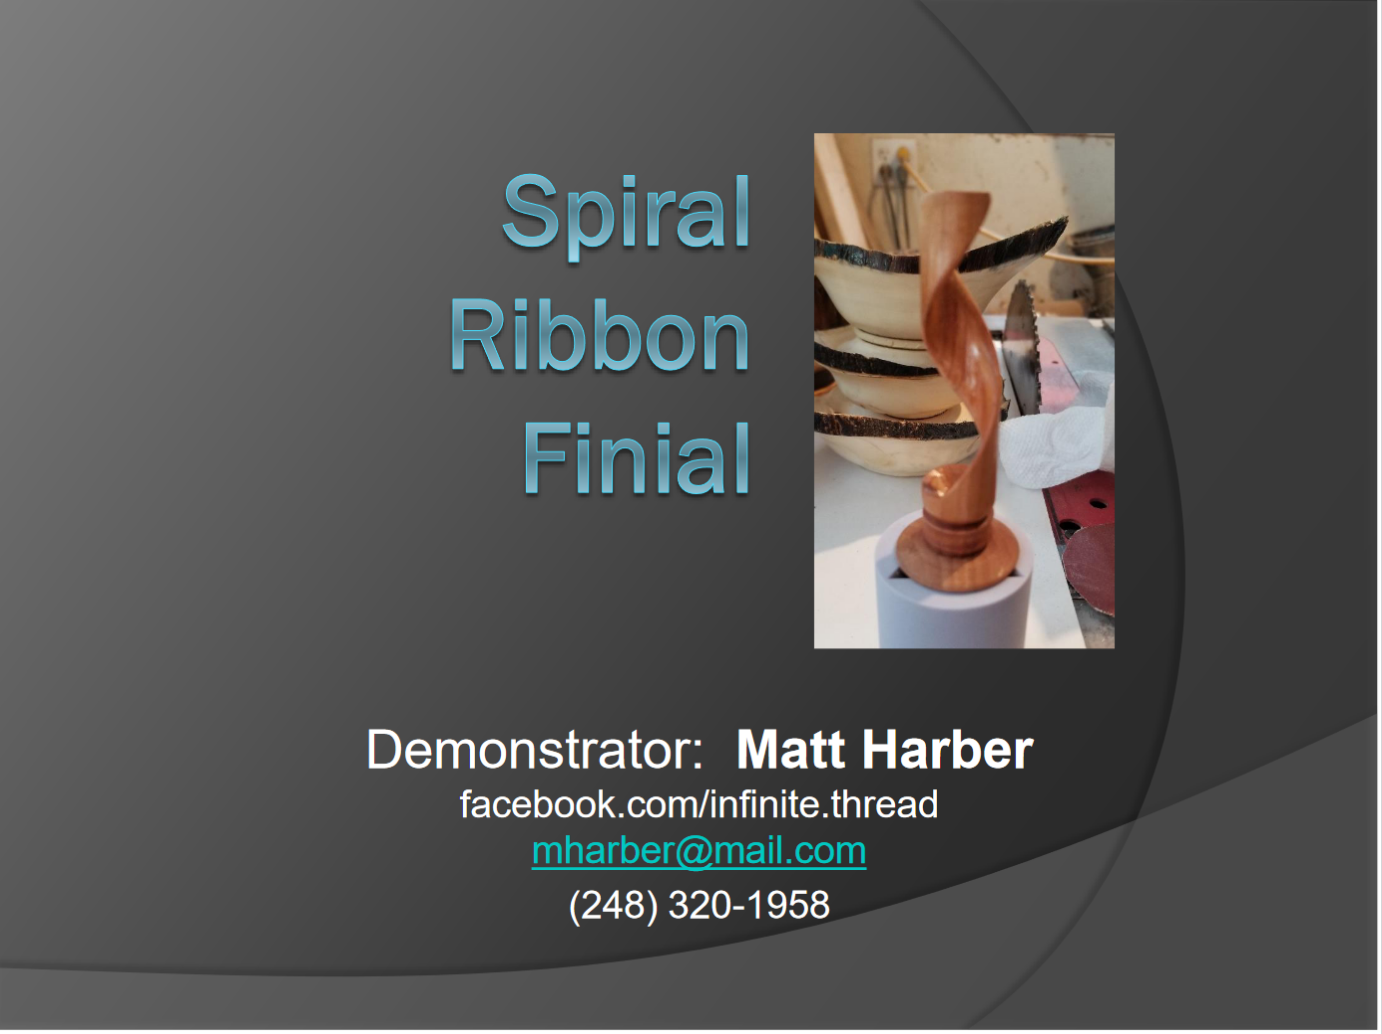 Spiral Ribbon Finial Cover Sheet